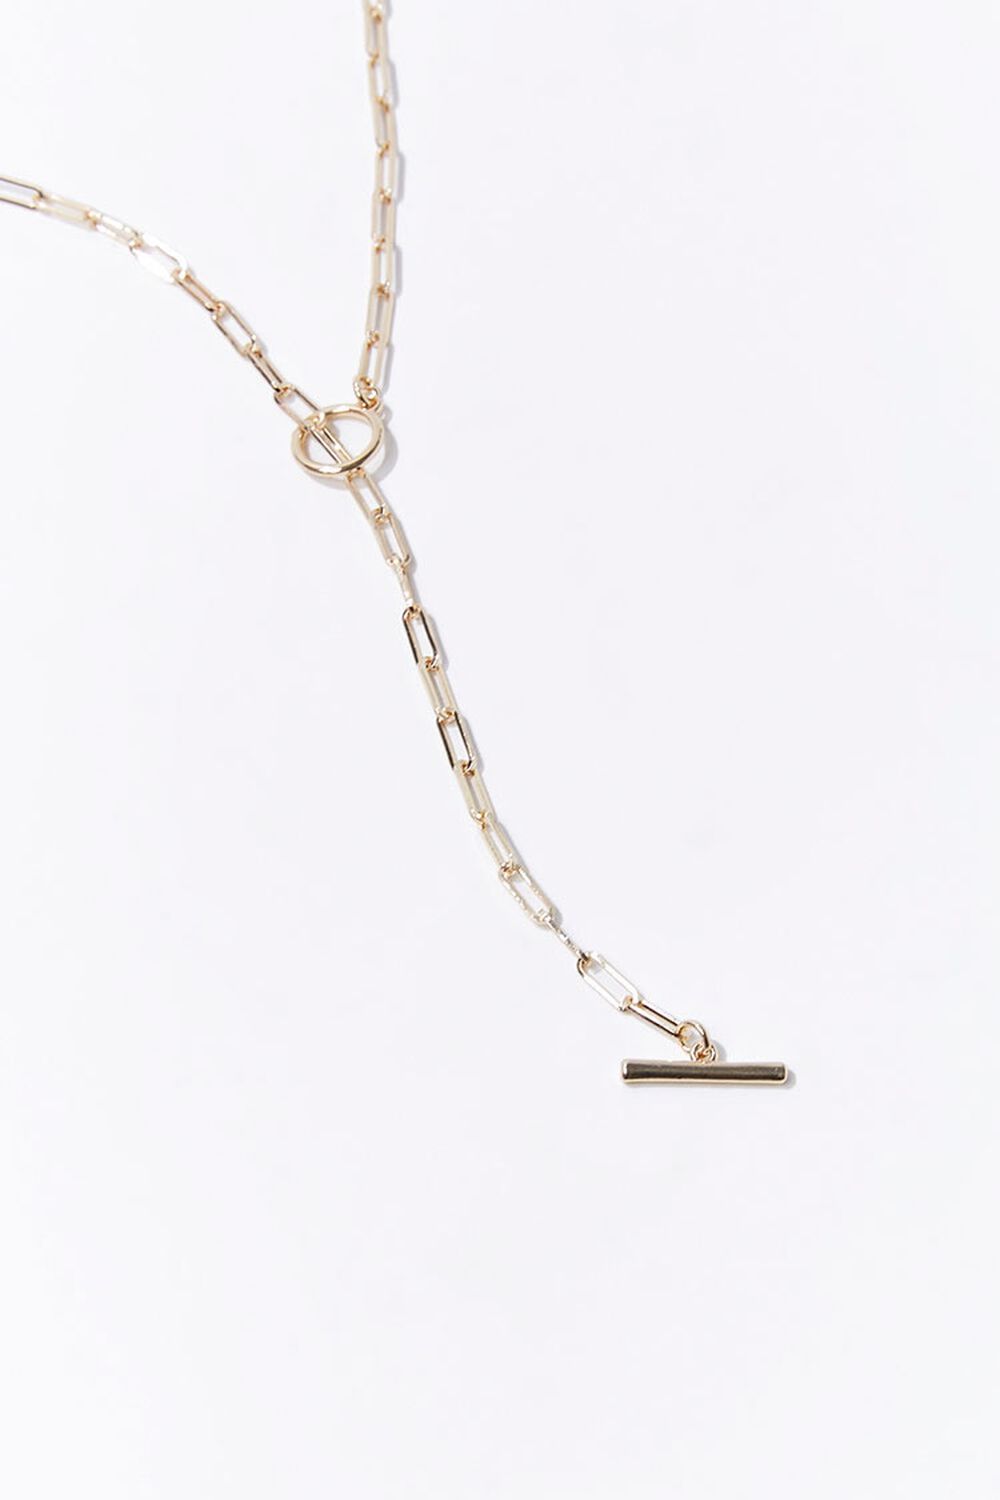 GOLD Upcycled Lariat Necklace, image 1